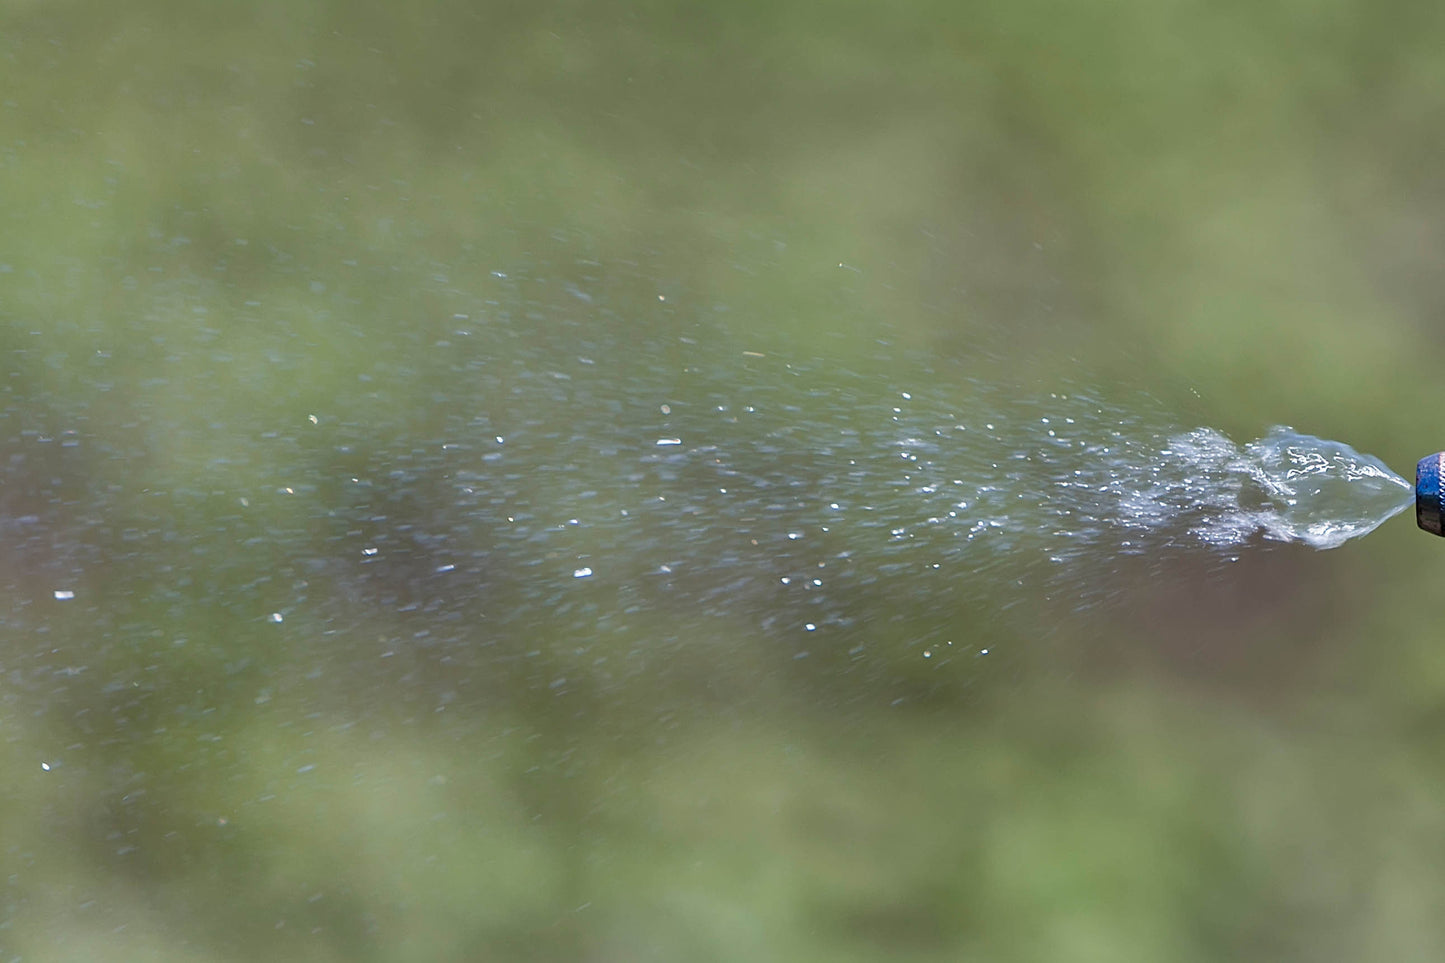 liquid being sprayed showing the spray pattern indicator